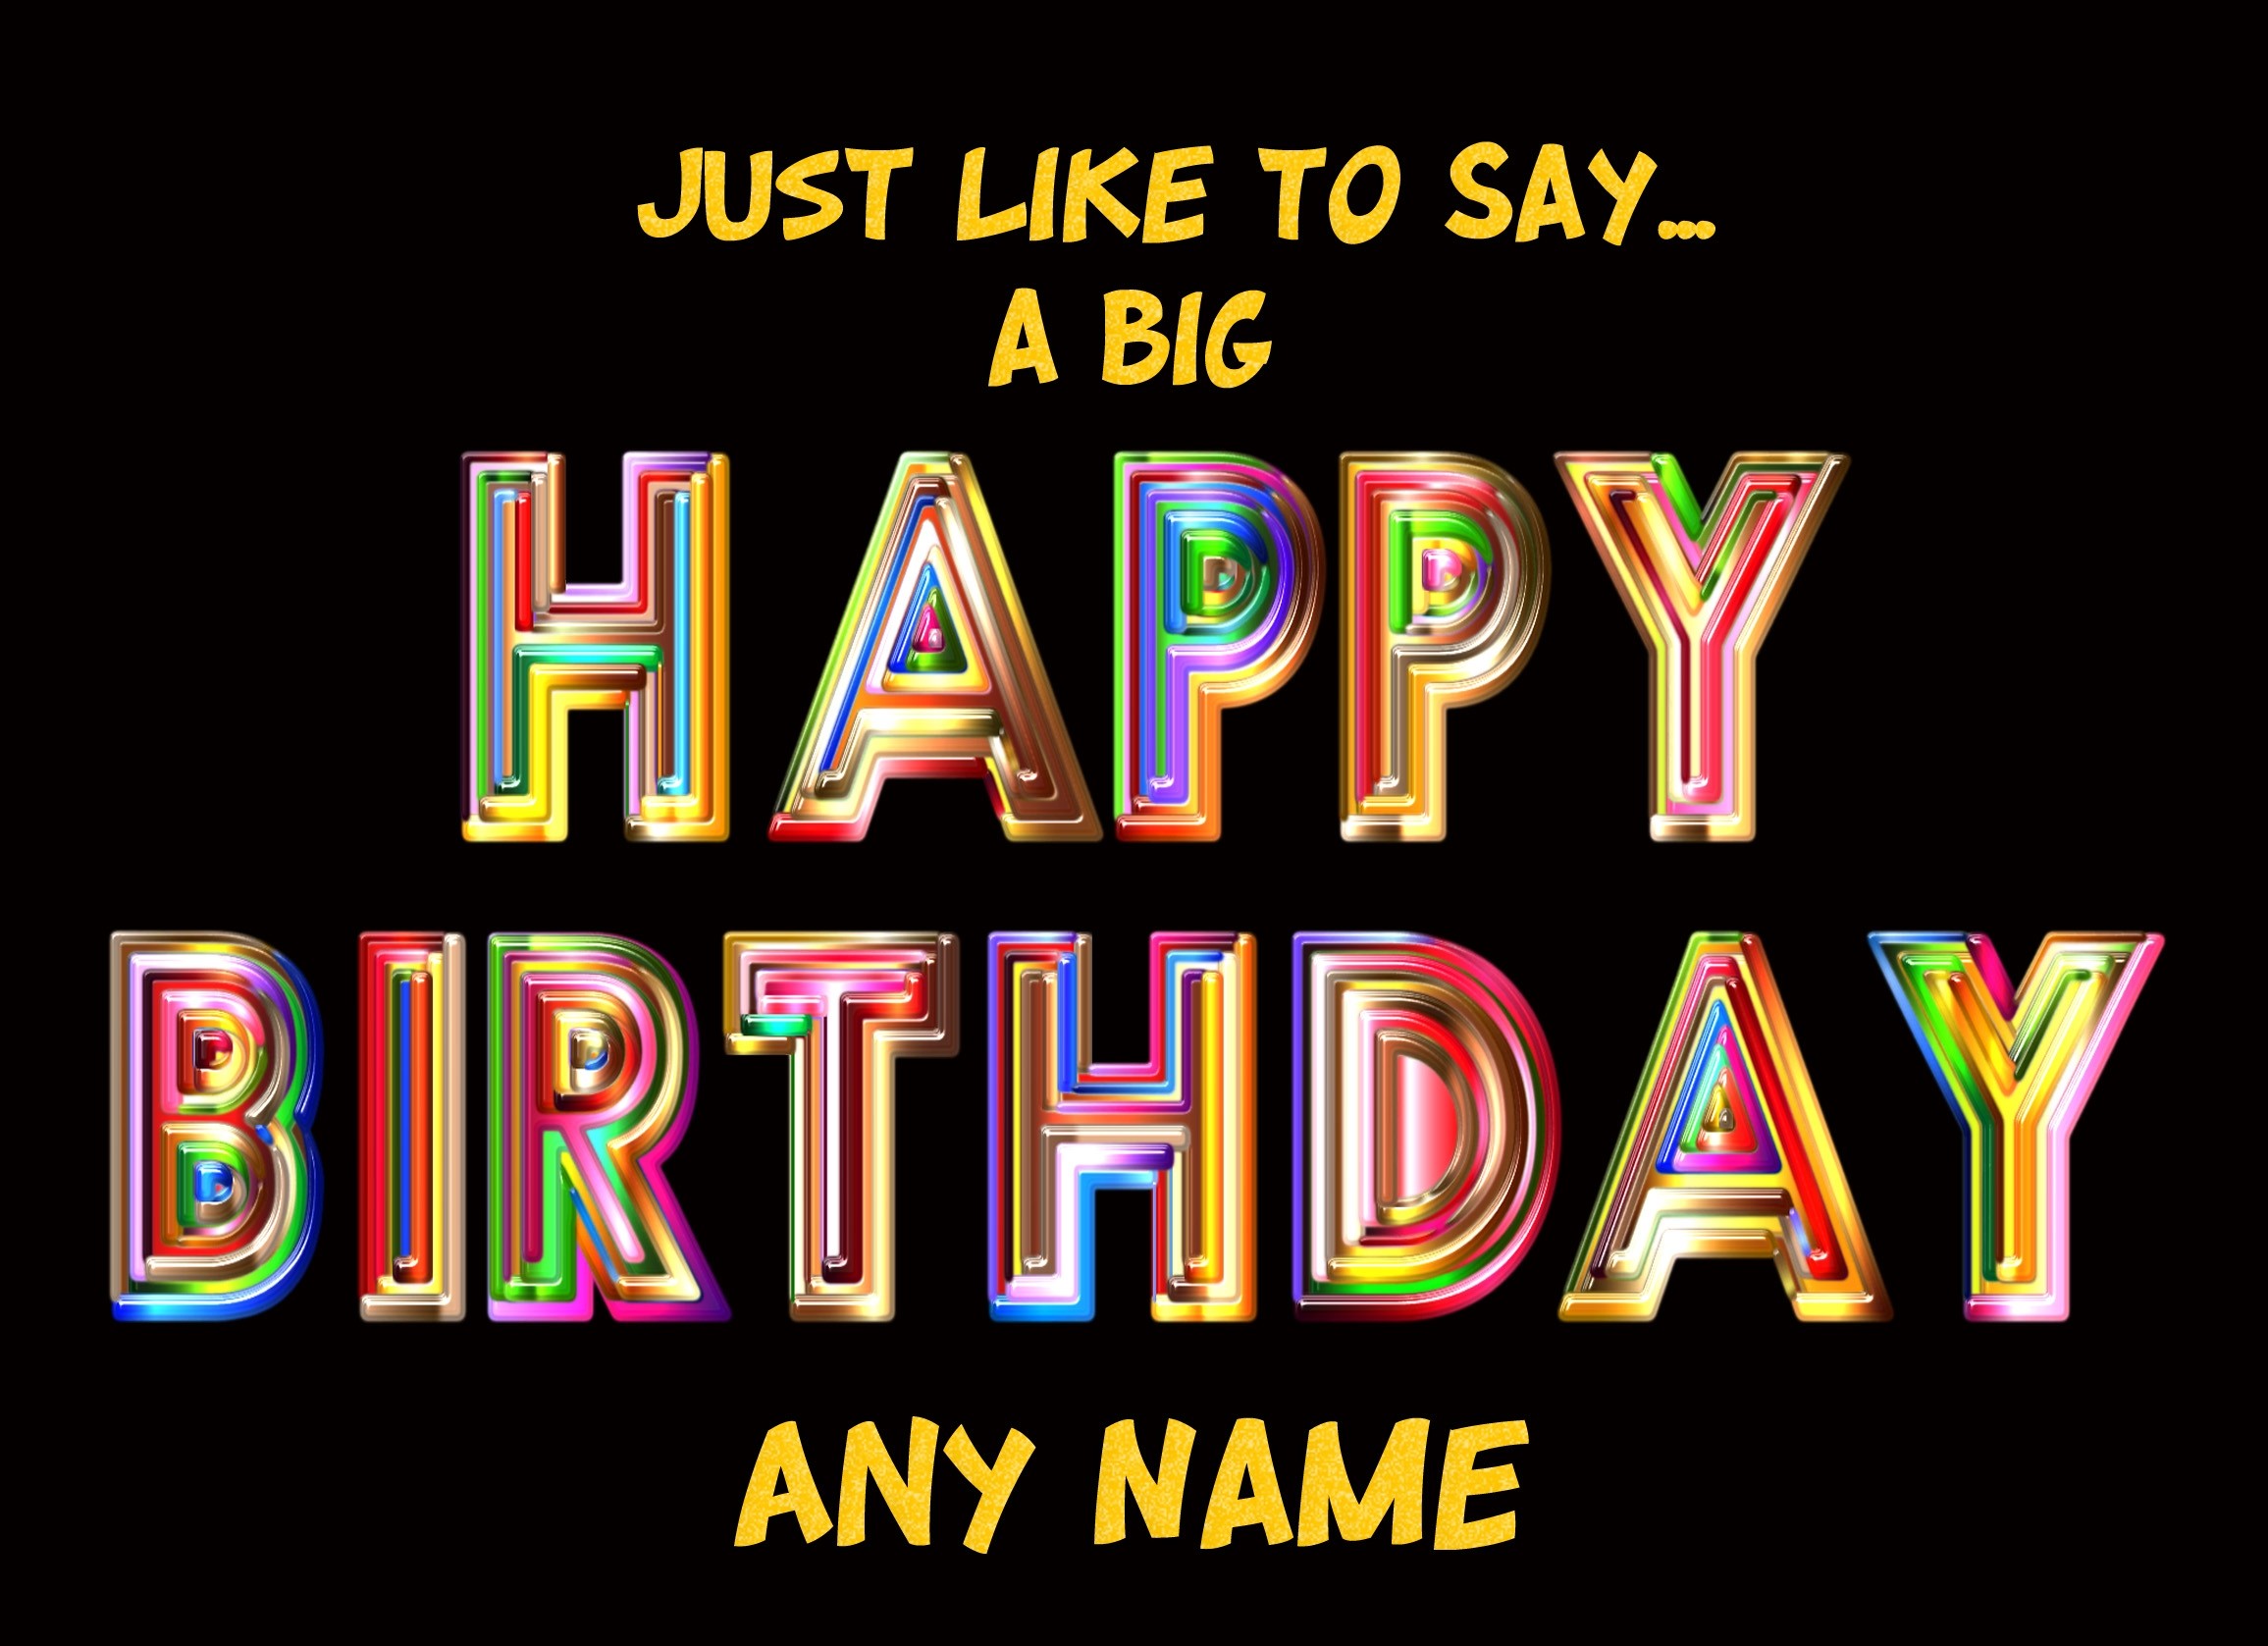 Personalised Happy Birthday Card